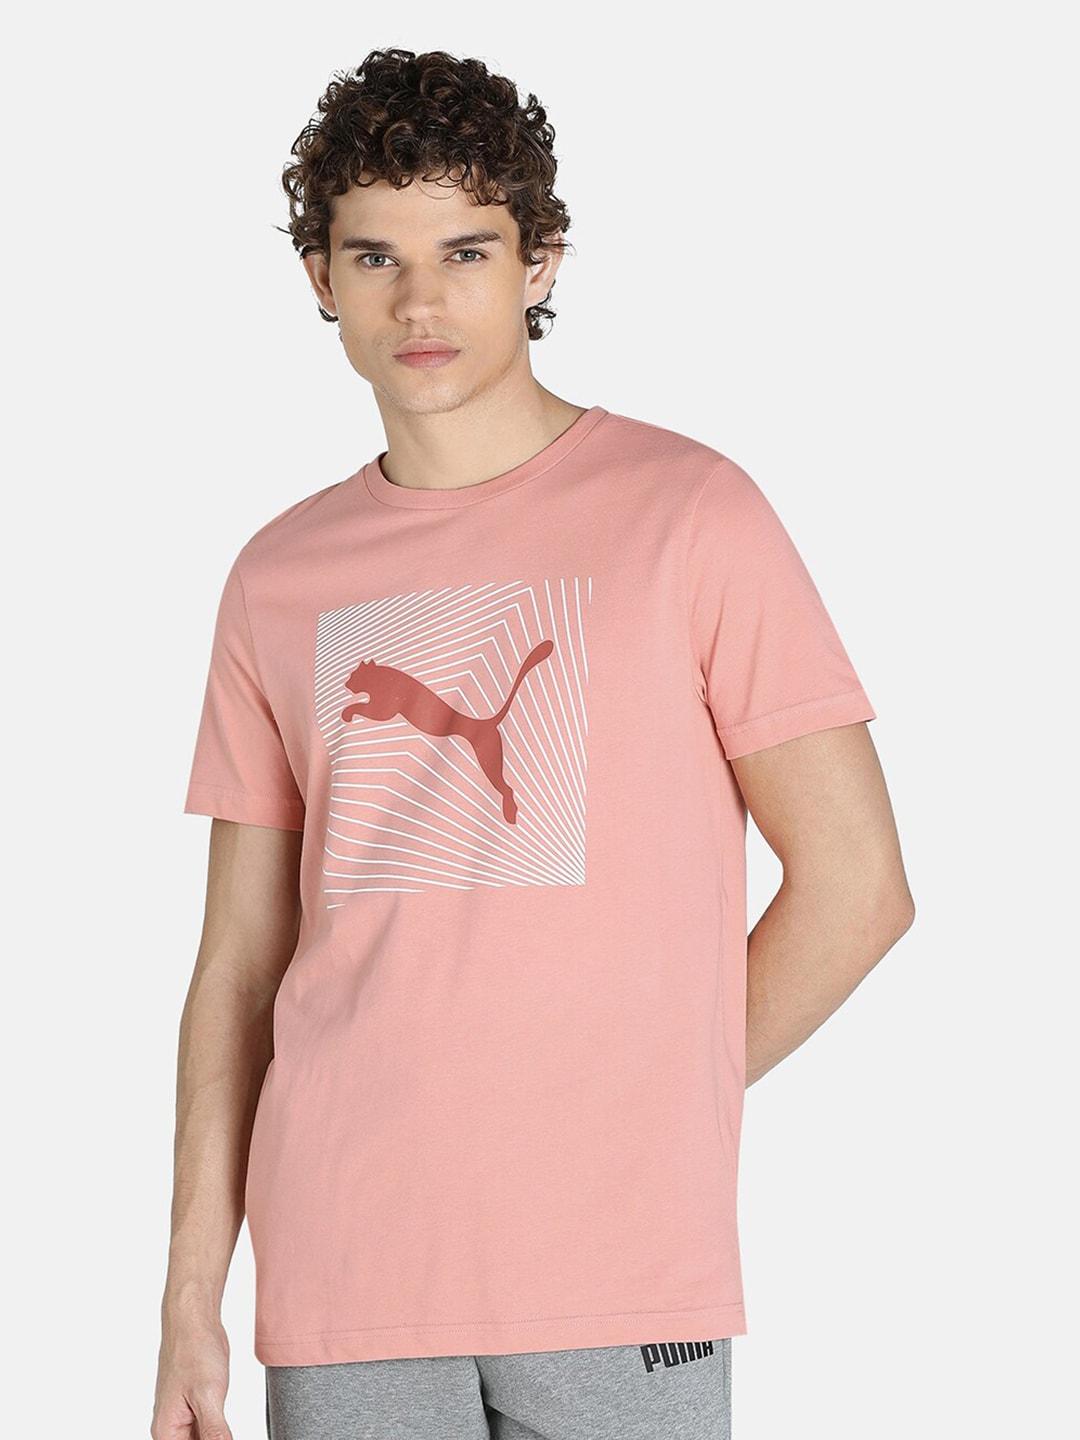 puma-men-pink-&-white-brand-logo-printed-slim-fit-t-shirt